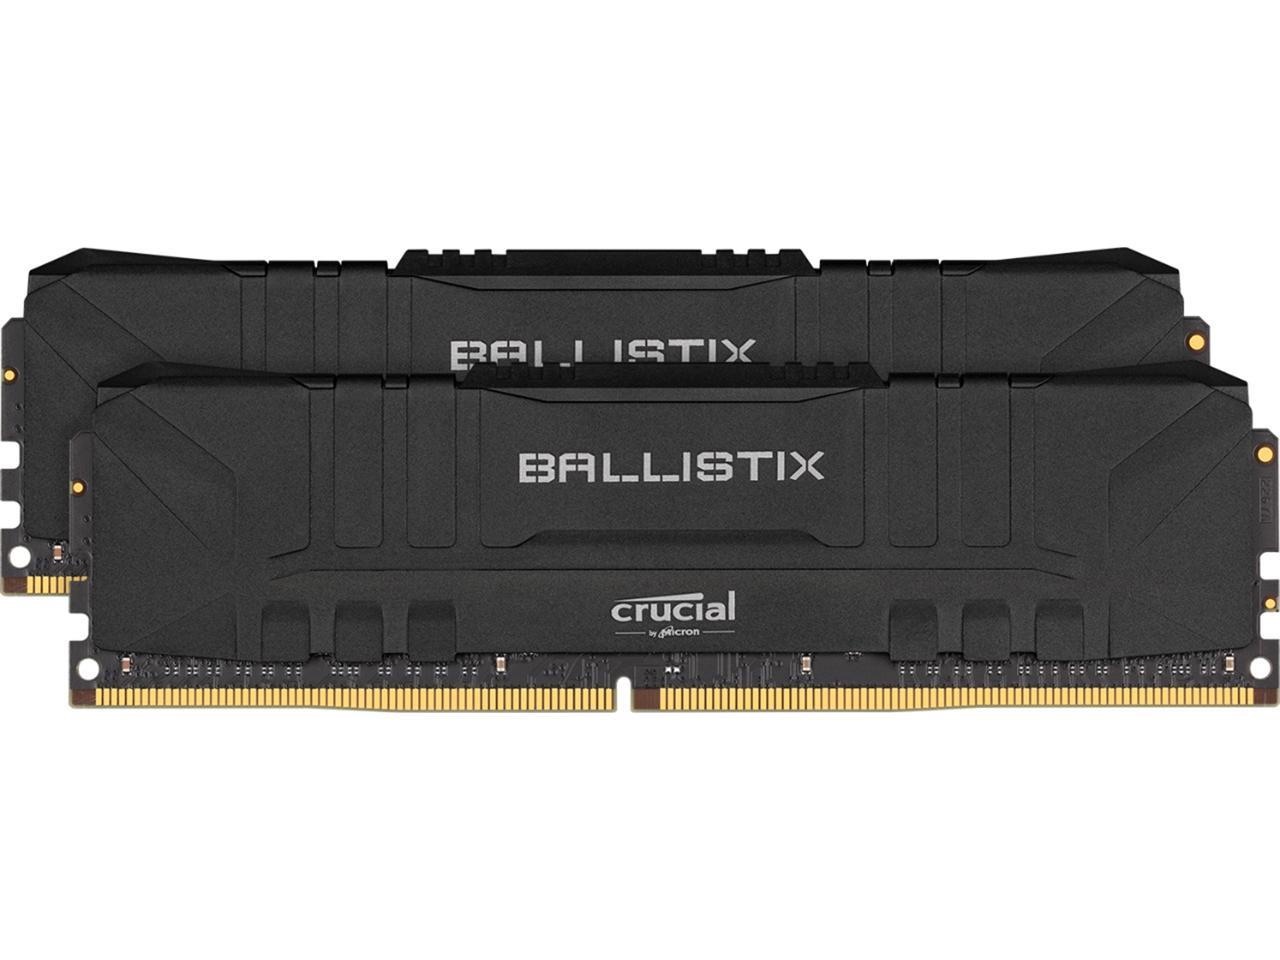 Select 16GB (8GBx2) CL16 Crucial Ballistix Desktop Memory at Newegg; starts at $79.19